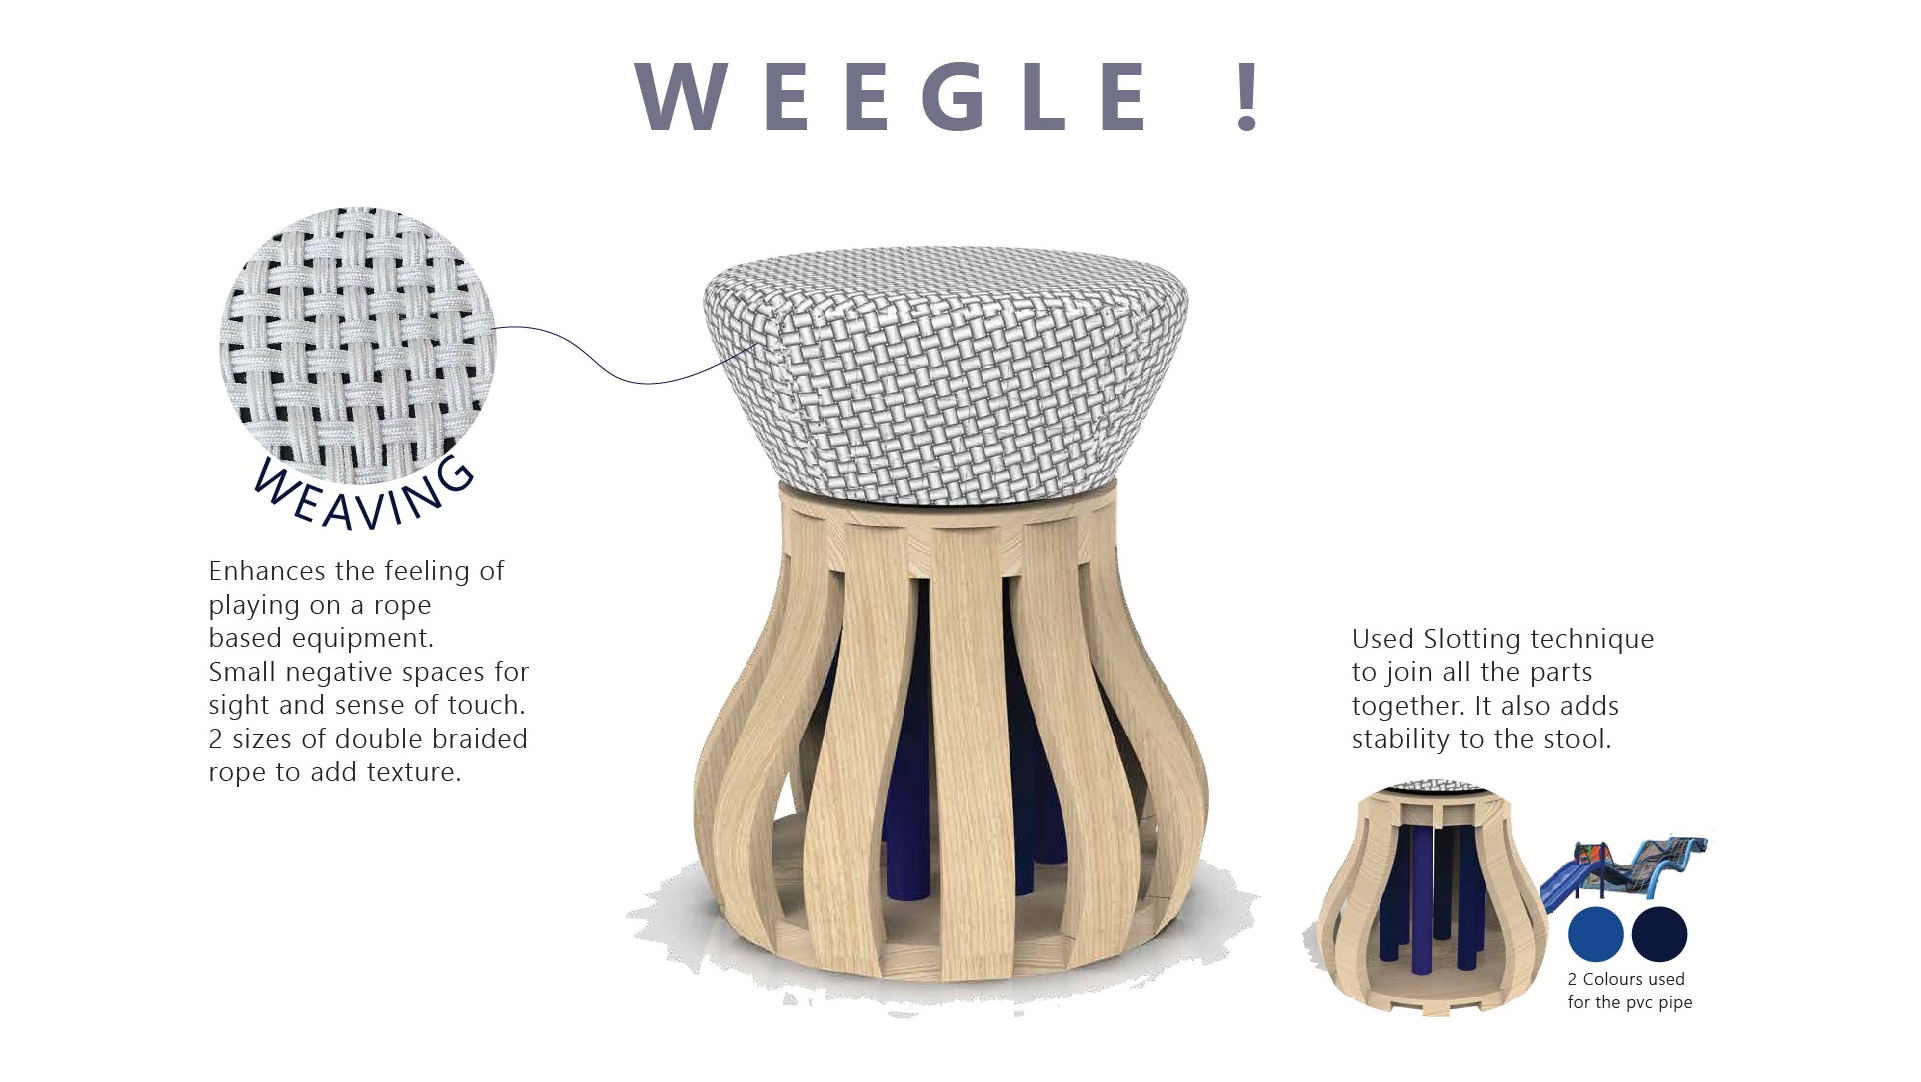 a stool design named Weegle